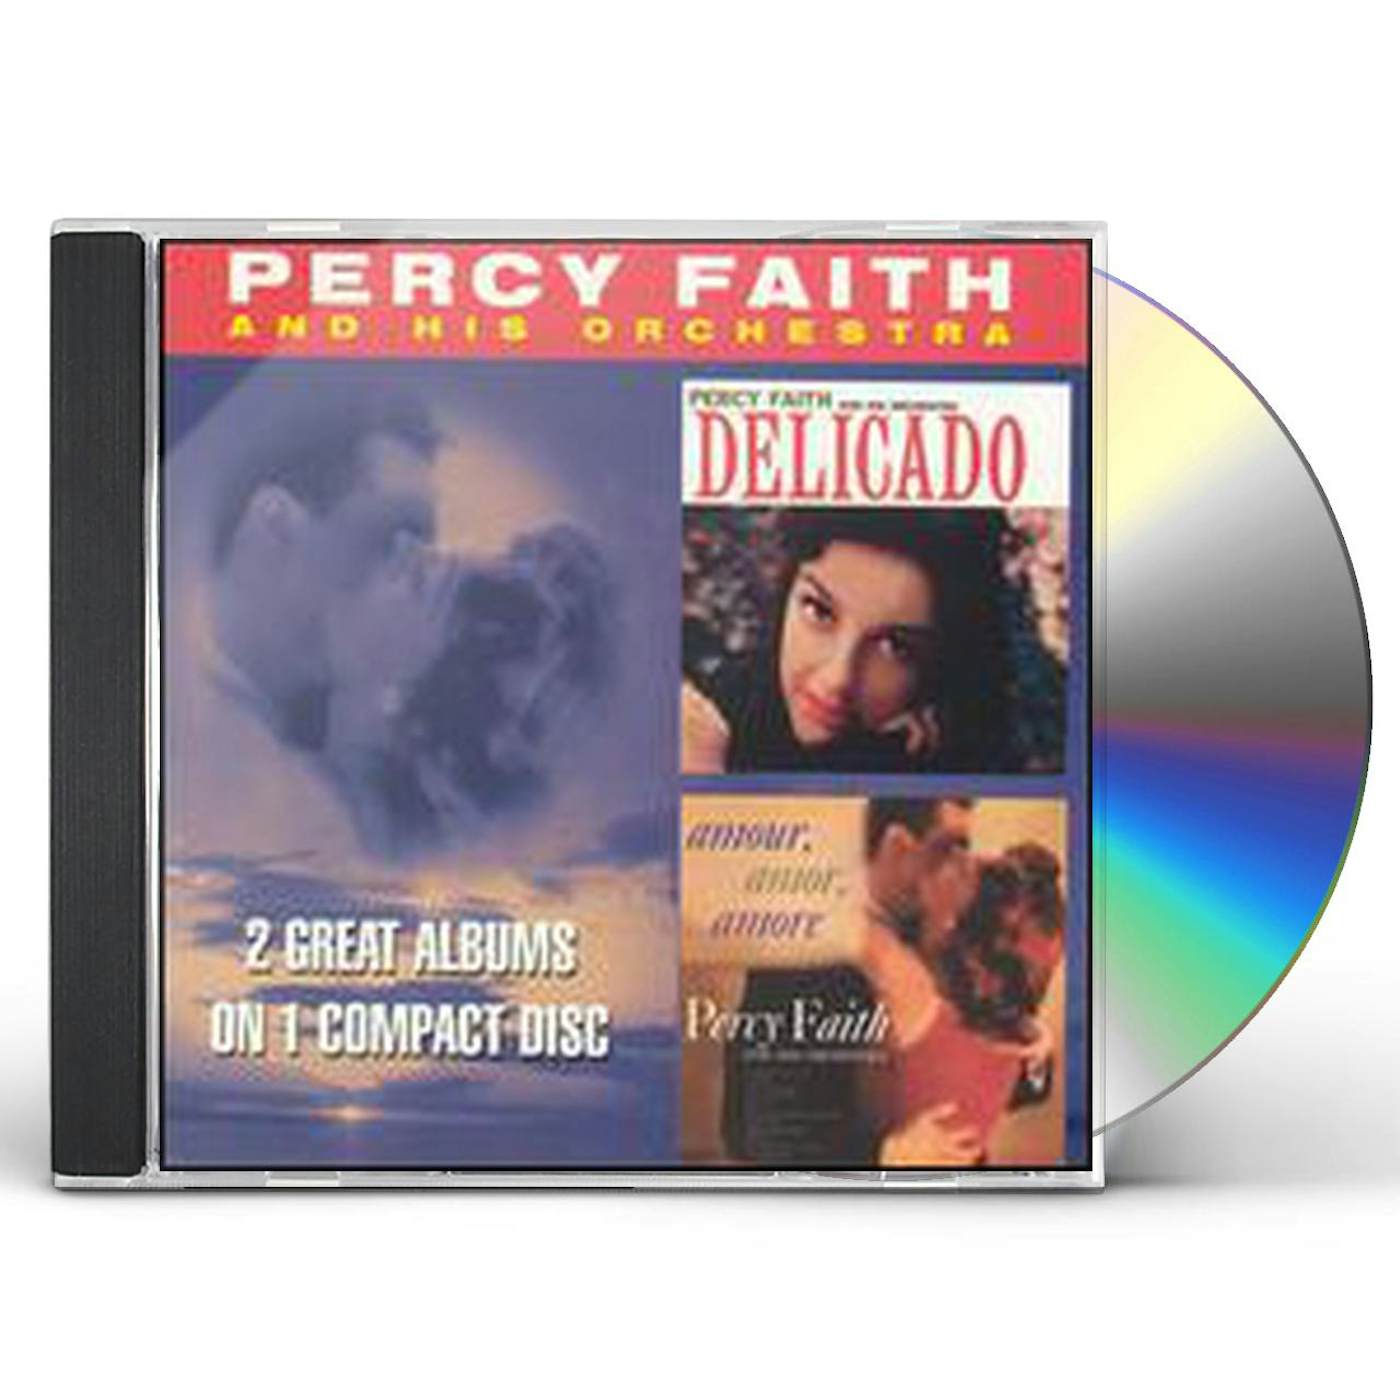 Percy Faith DELICADO / AMOUR AMOR AMORE CD